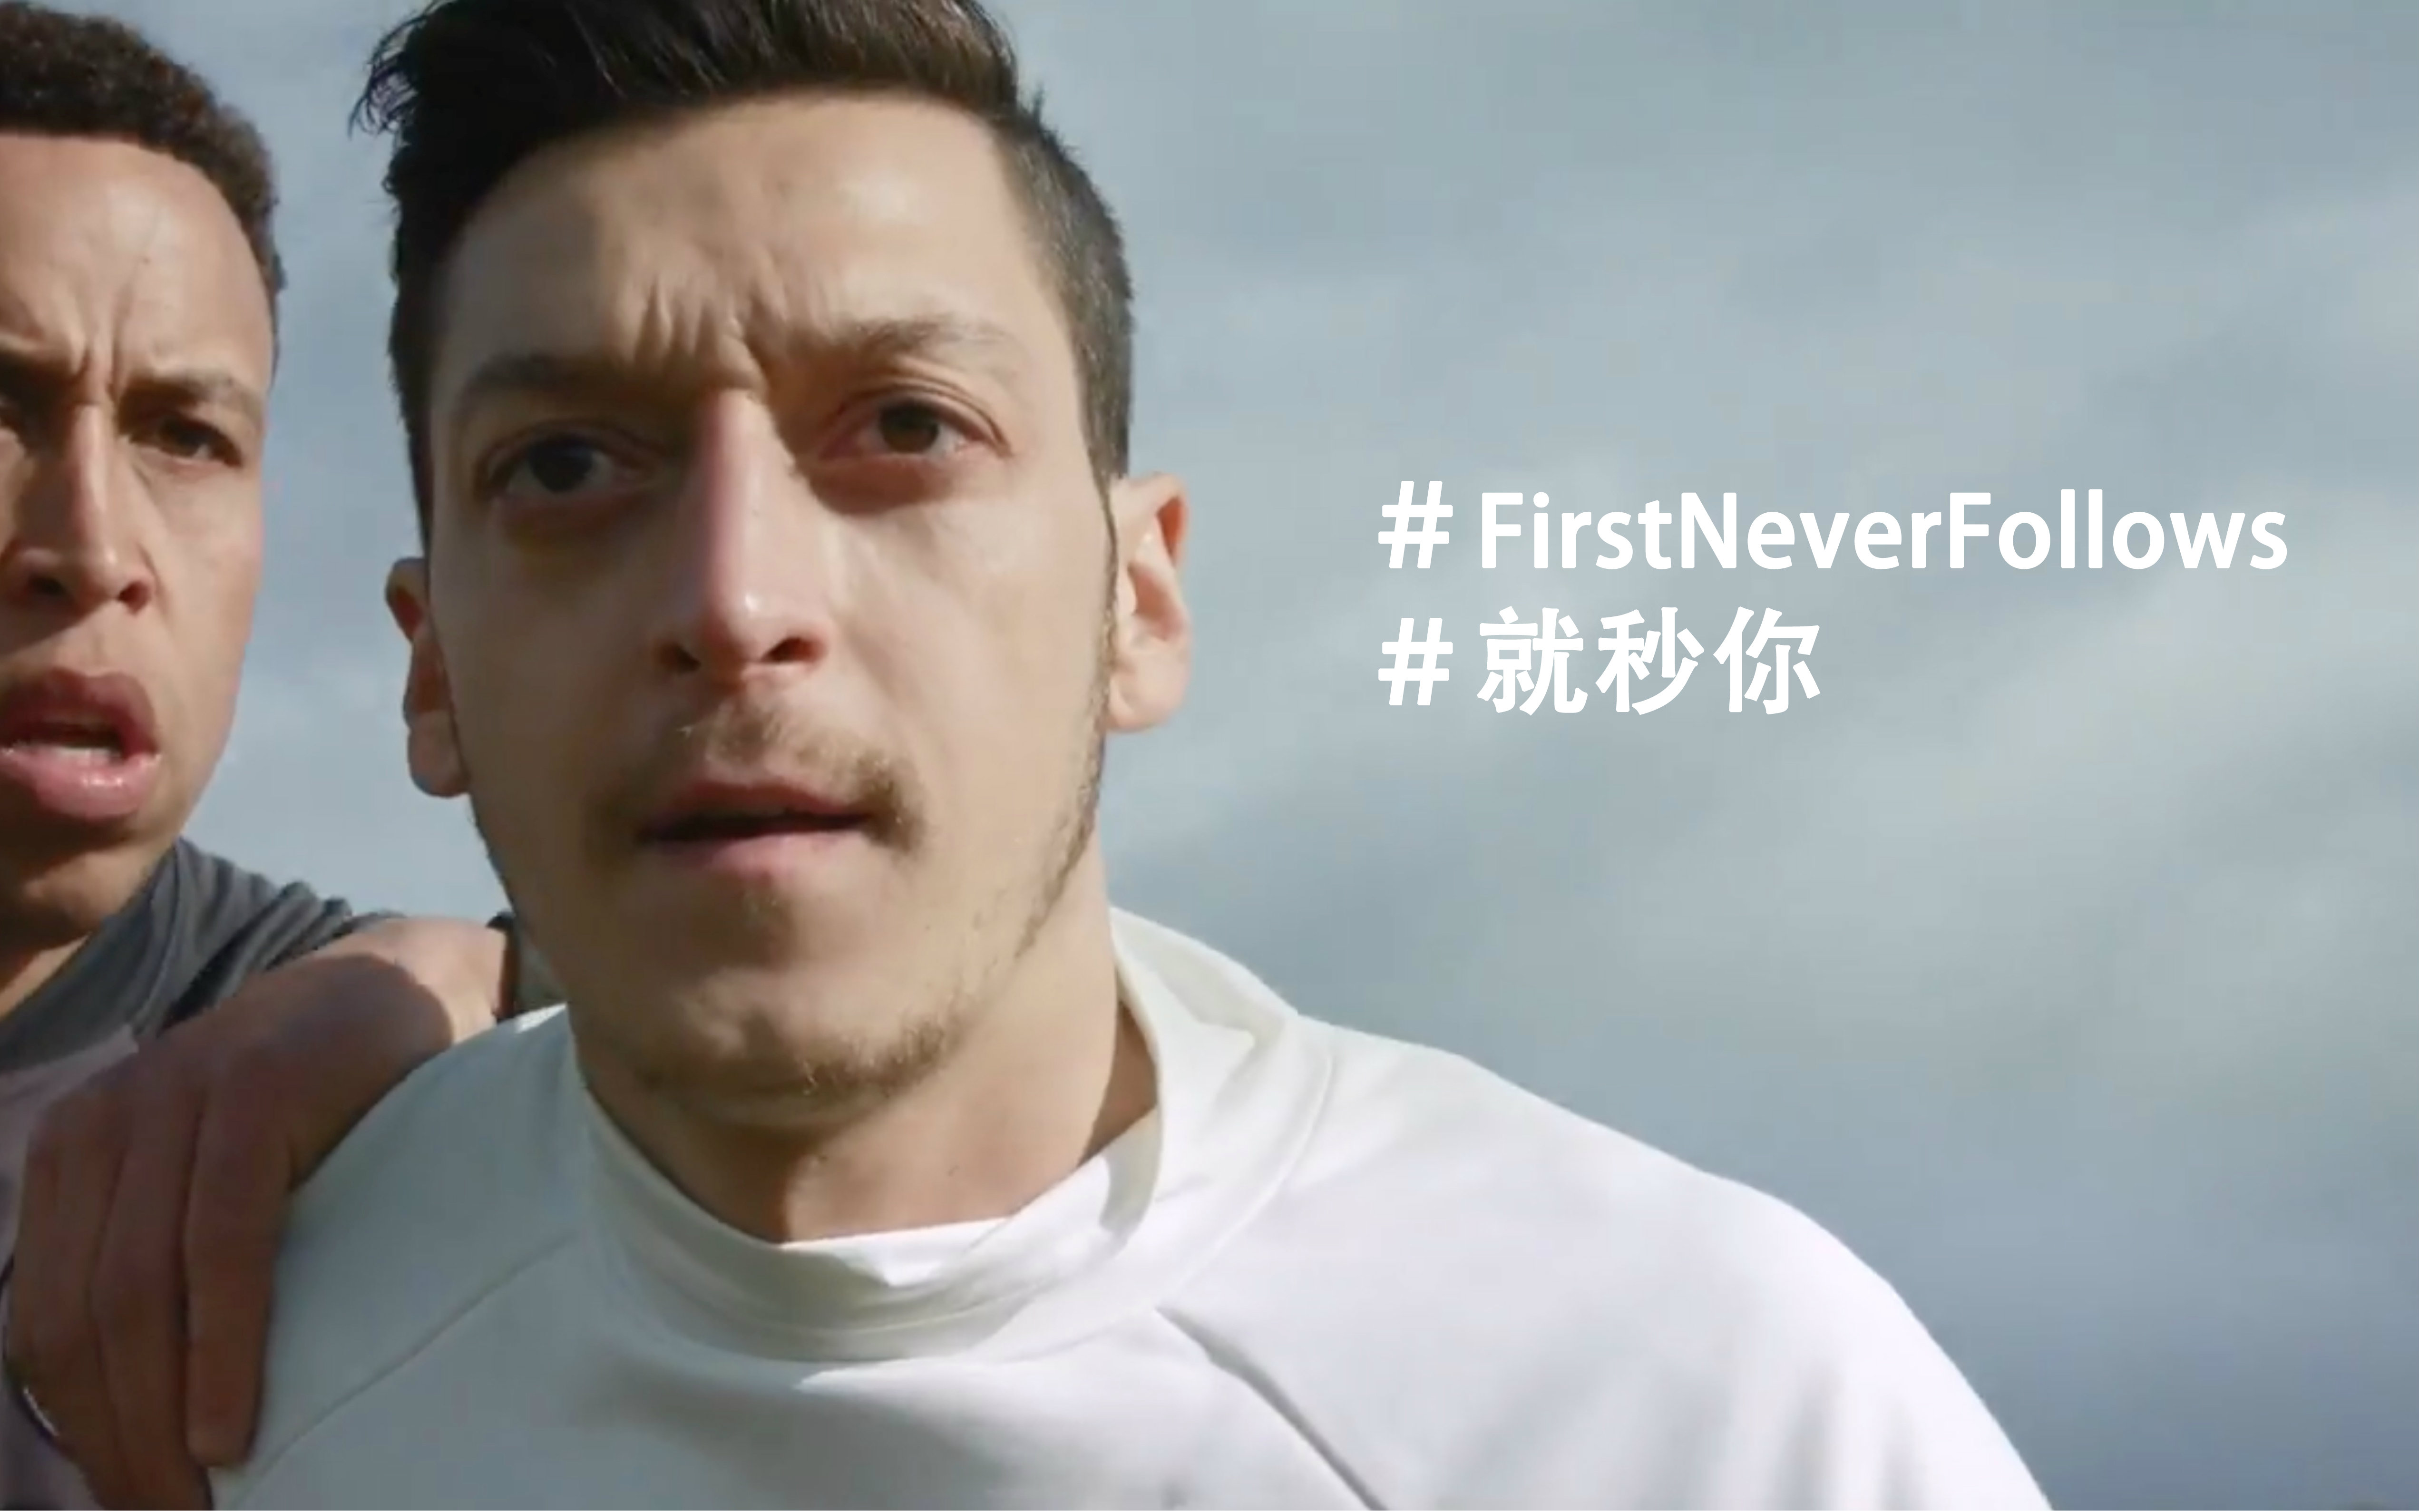 #FirstNeverFollows#就秒你#阿迪足球广告-博格